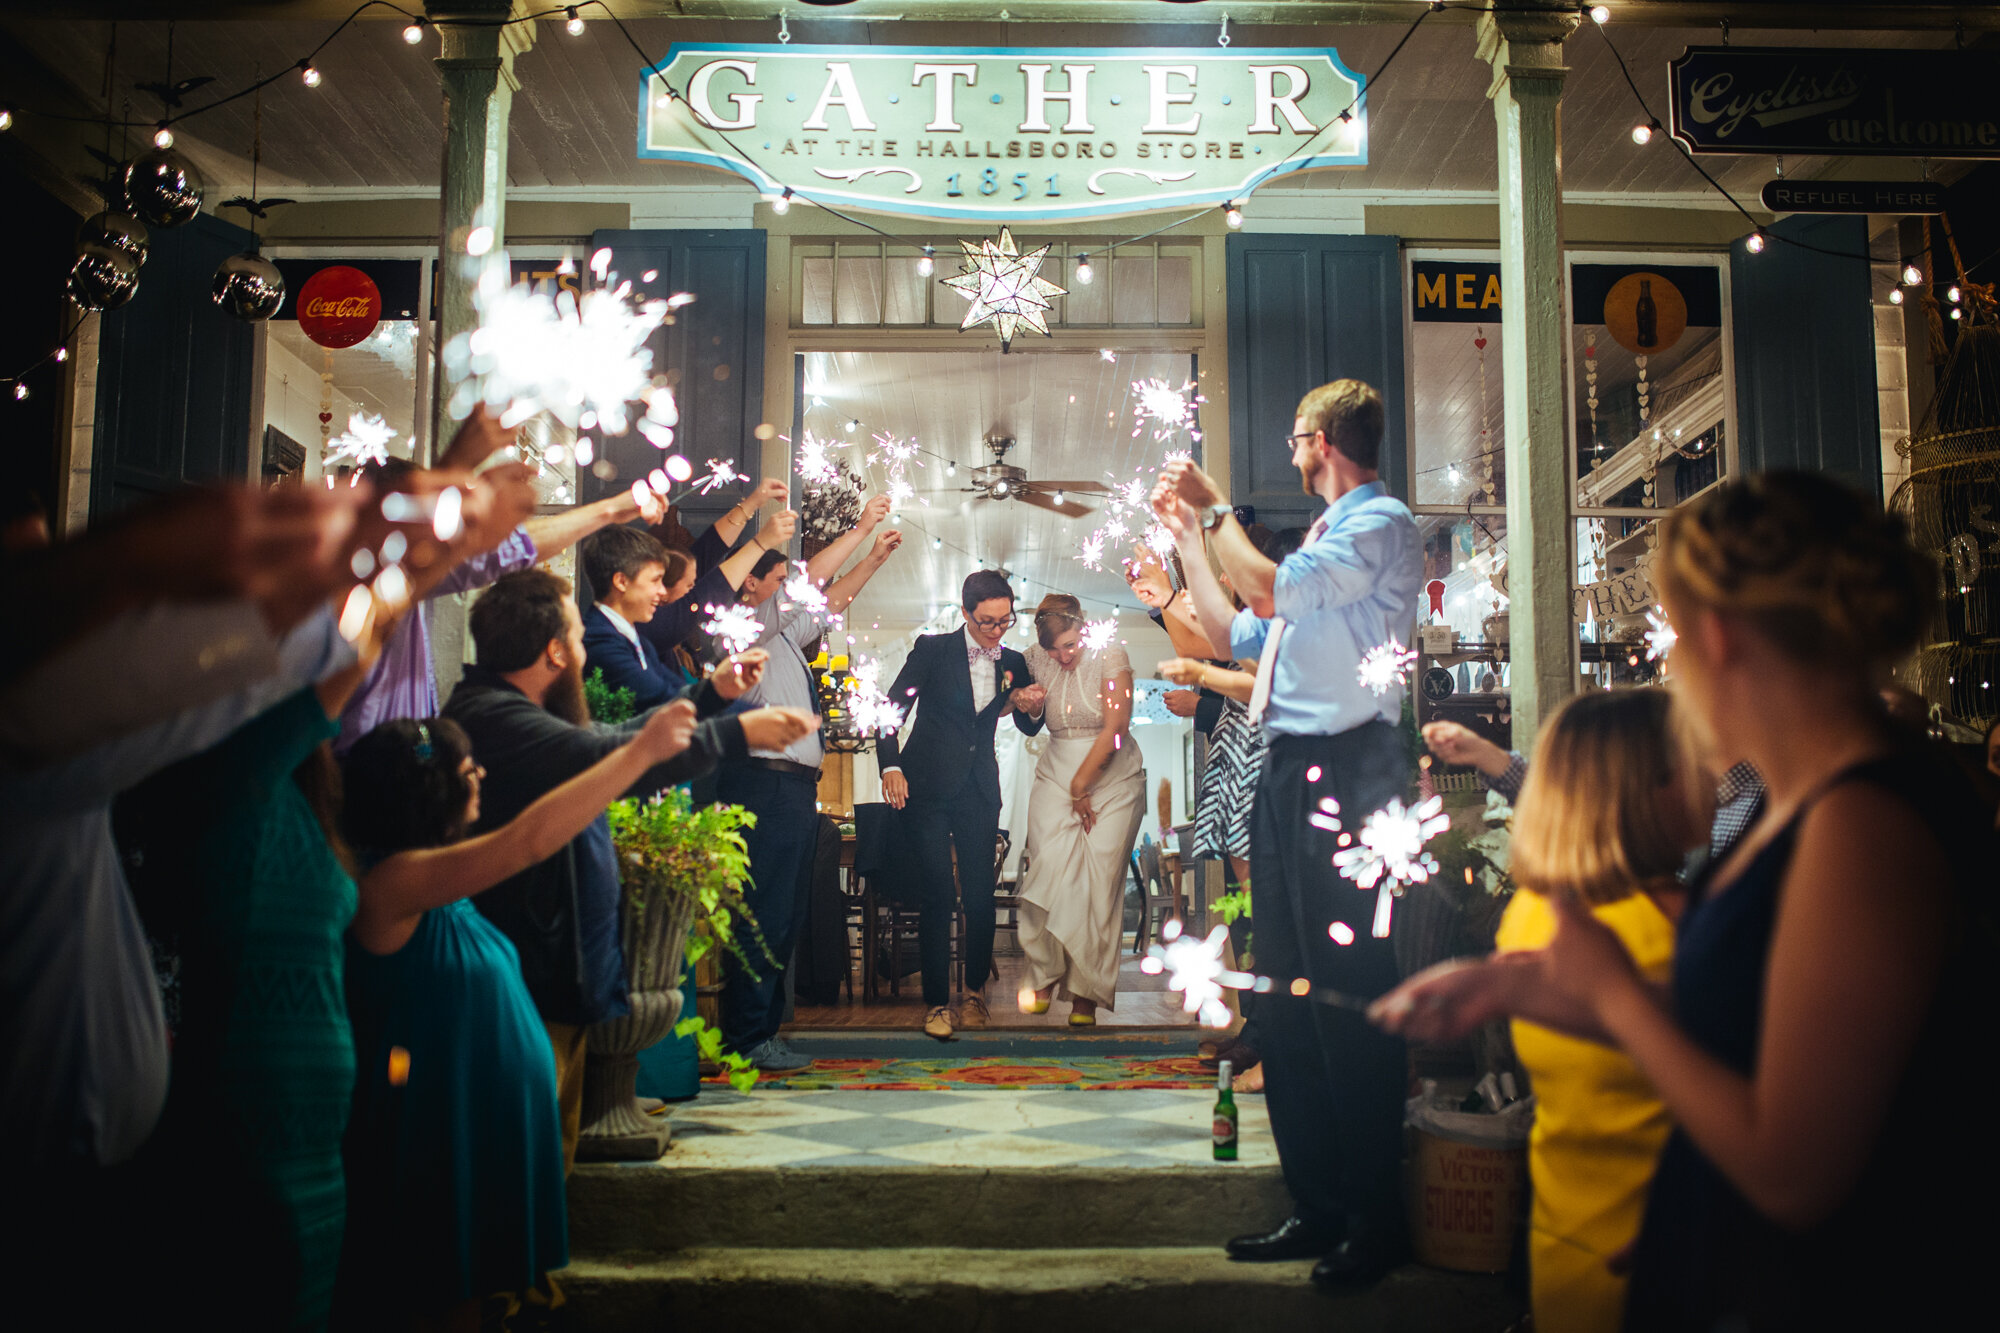 Newlyweds exiting through sparklers at Gather at the Hallsboro Store VA Shawnee Custalow photo